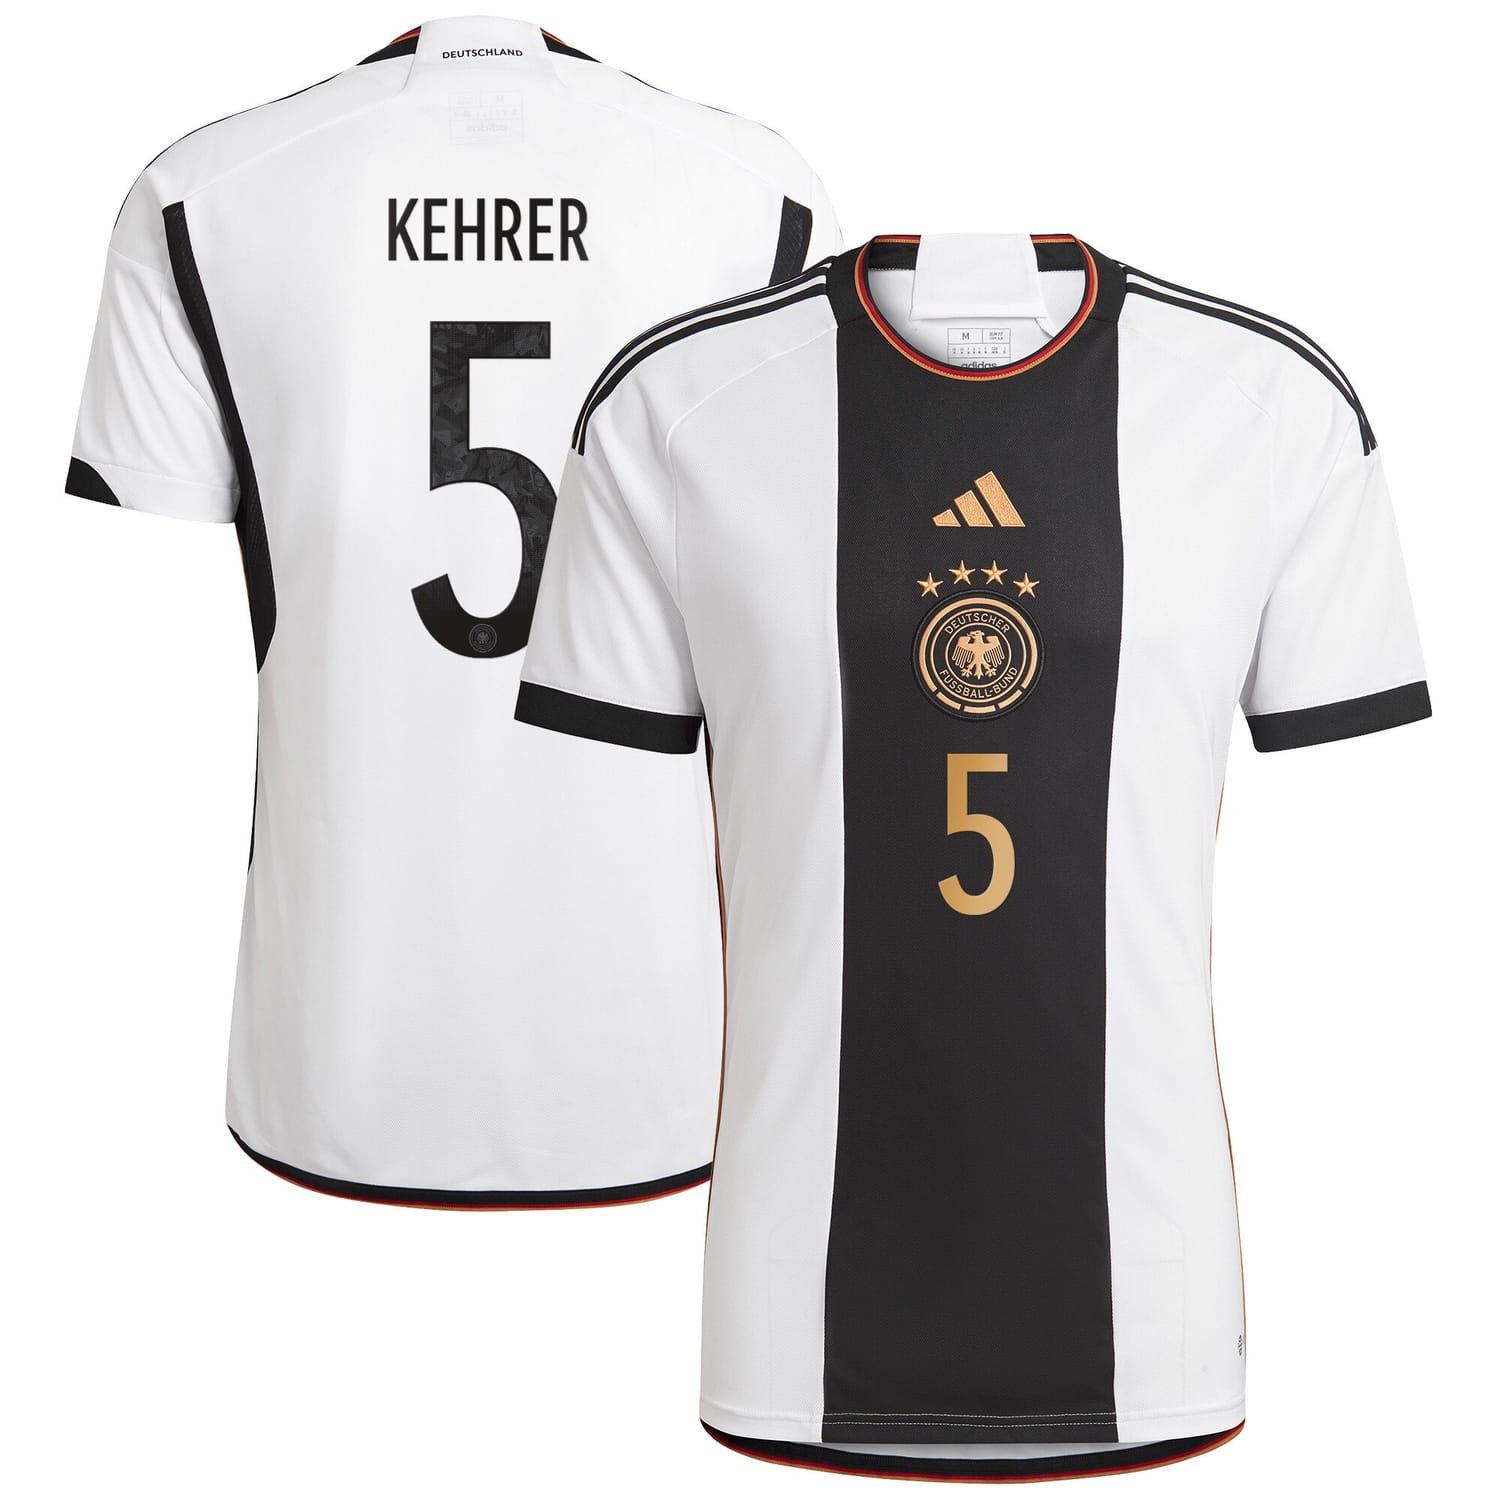 Germany National Team Home Jersey Shirt player Kehrer 5 printing for Men